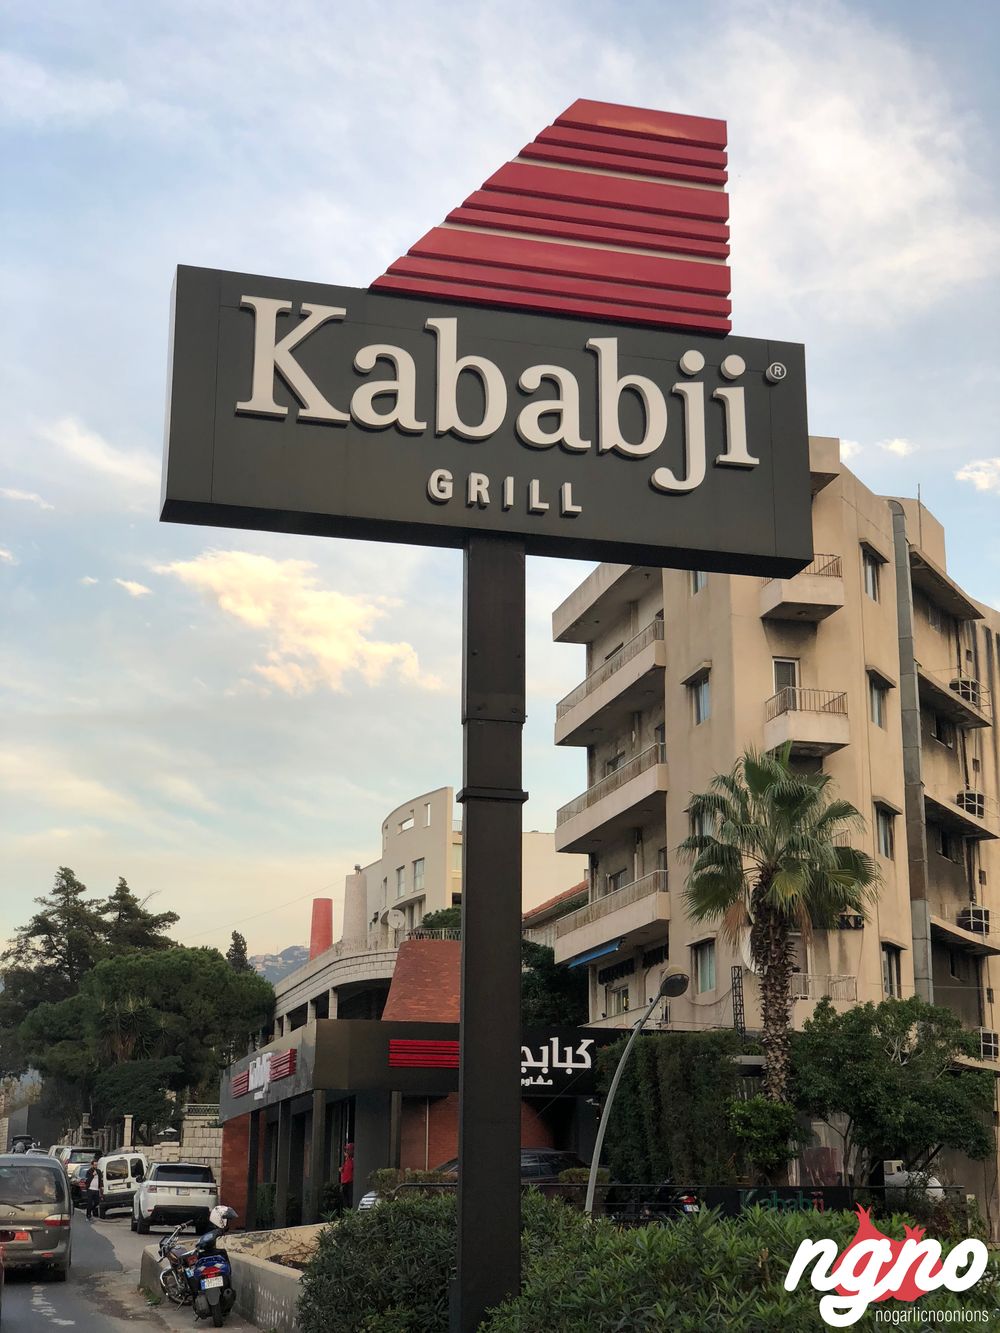 kababji-new-logo32018-01-10-09-44-22